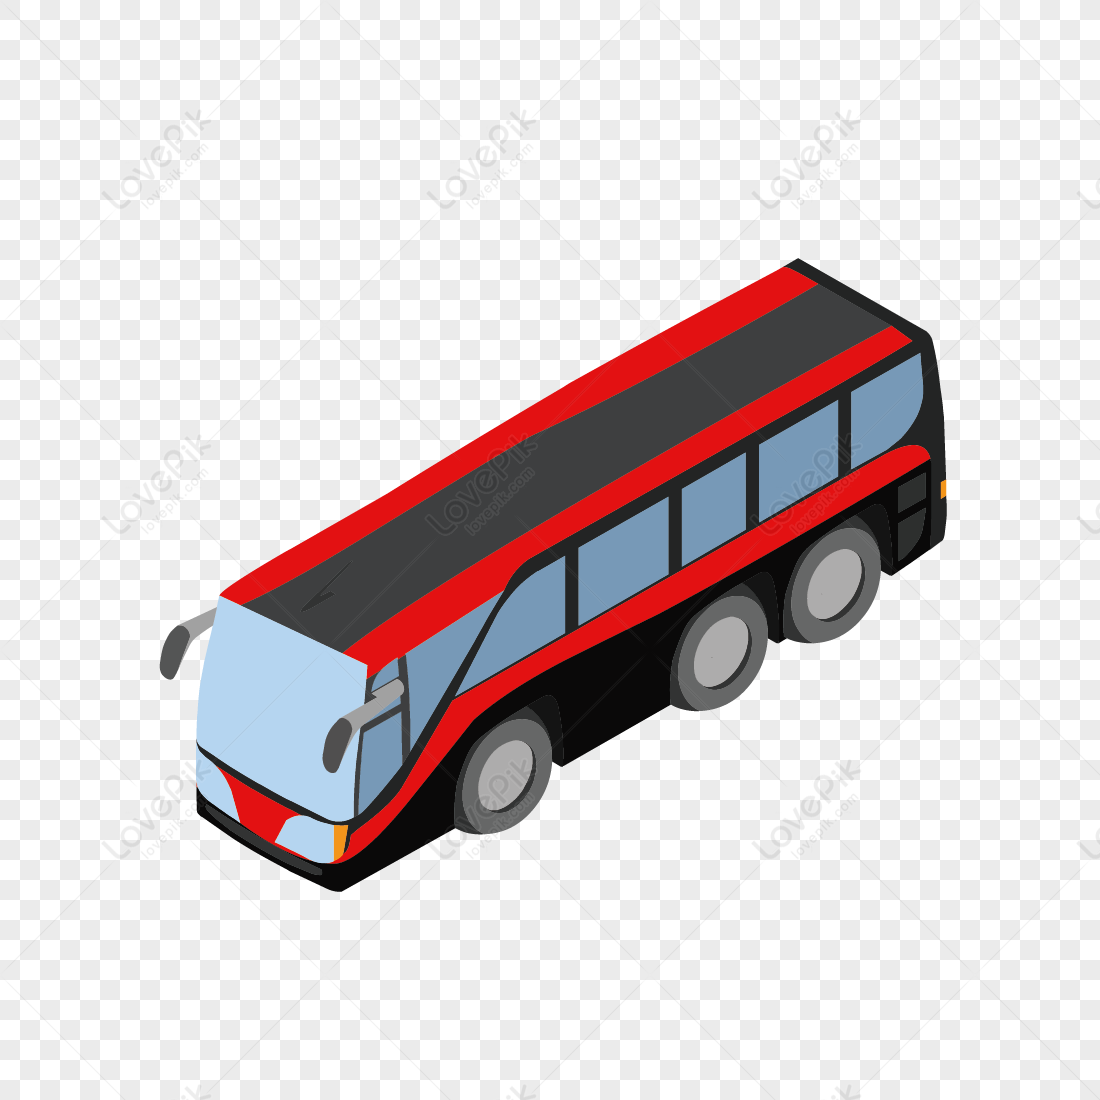 Bus, material, trip, bus png transparent background